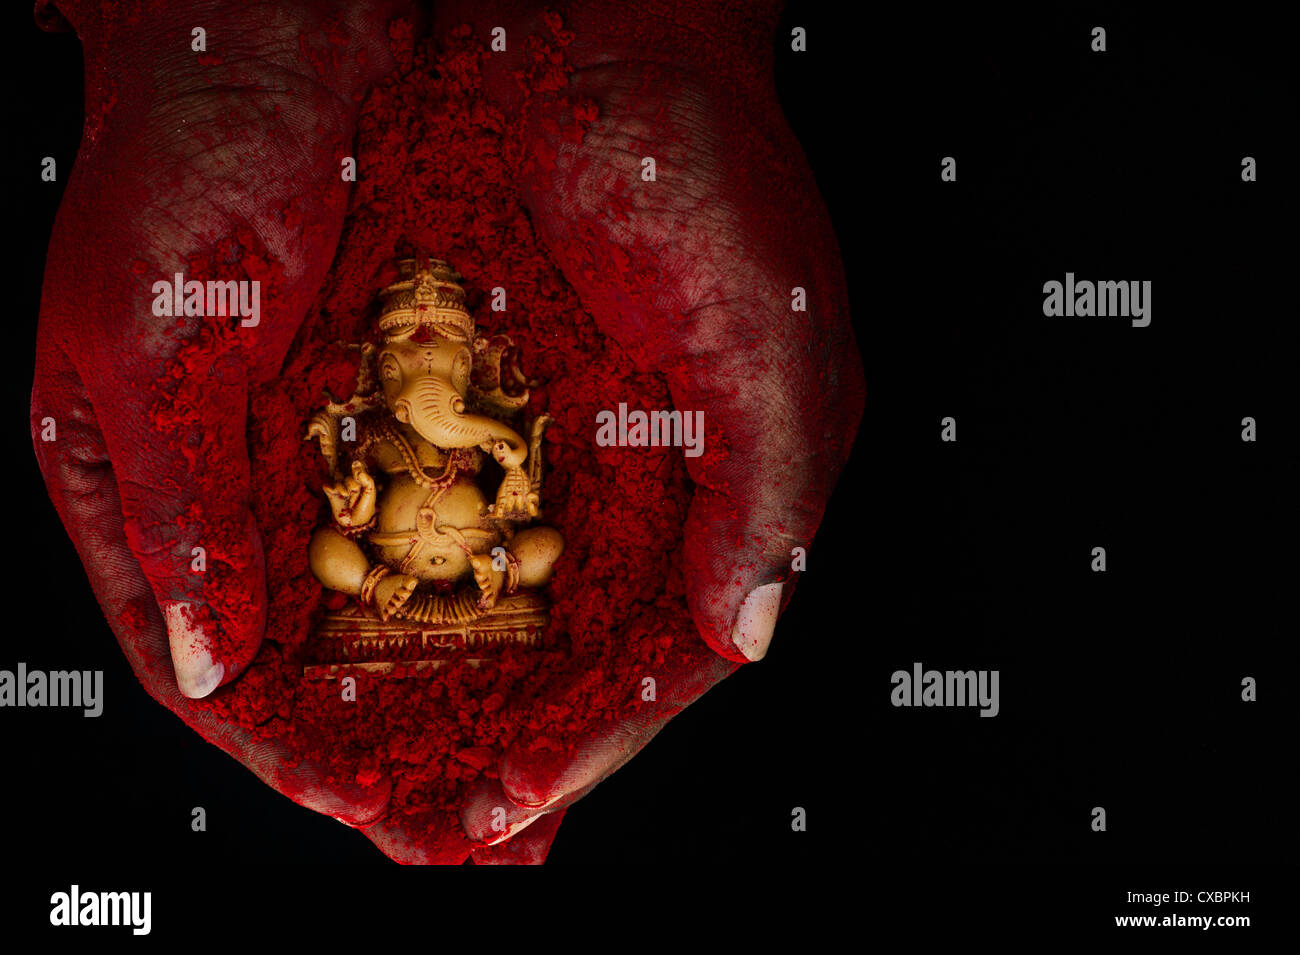 Hindu Elephant God. Red powder covered indian mans hand holding Lord Ganesha statue against black background Stock Photo